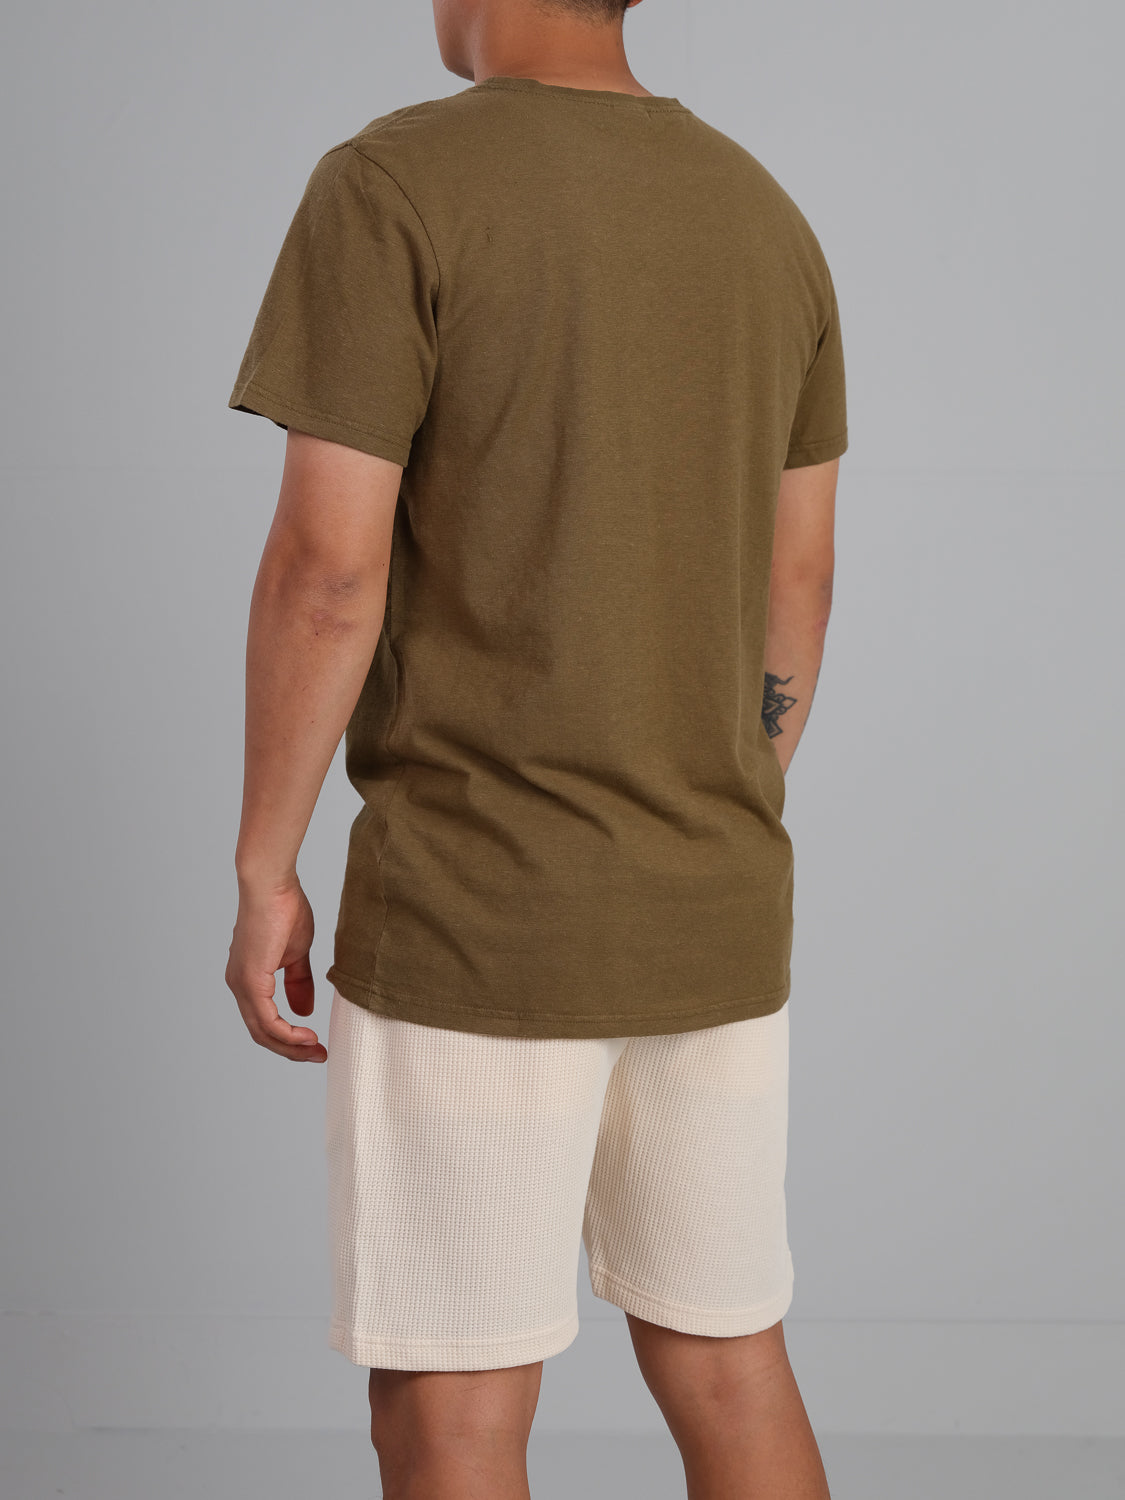 Dope Hemp Organic Cotton Crew Neck T-Shirt